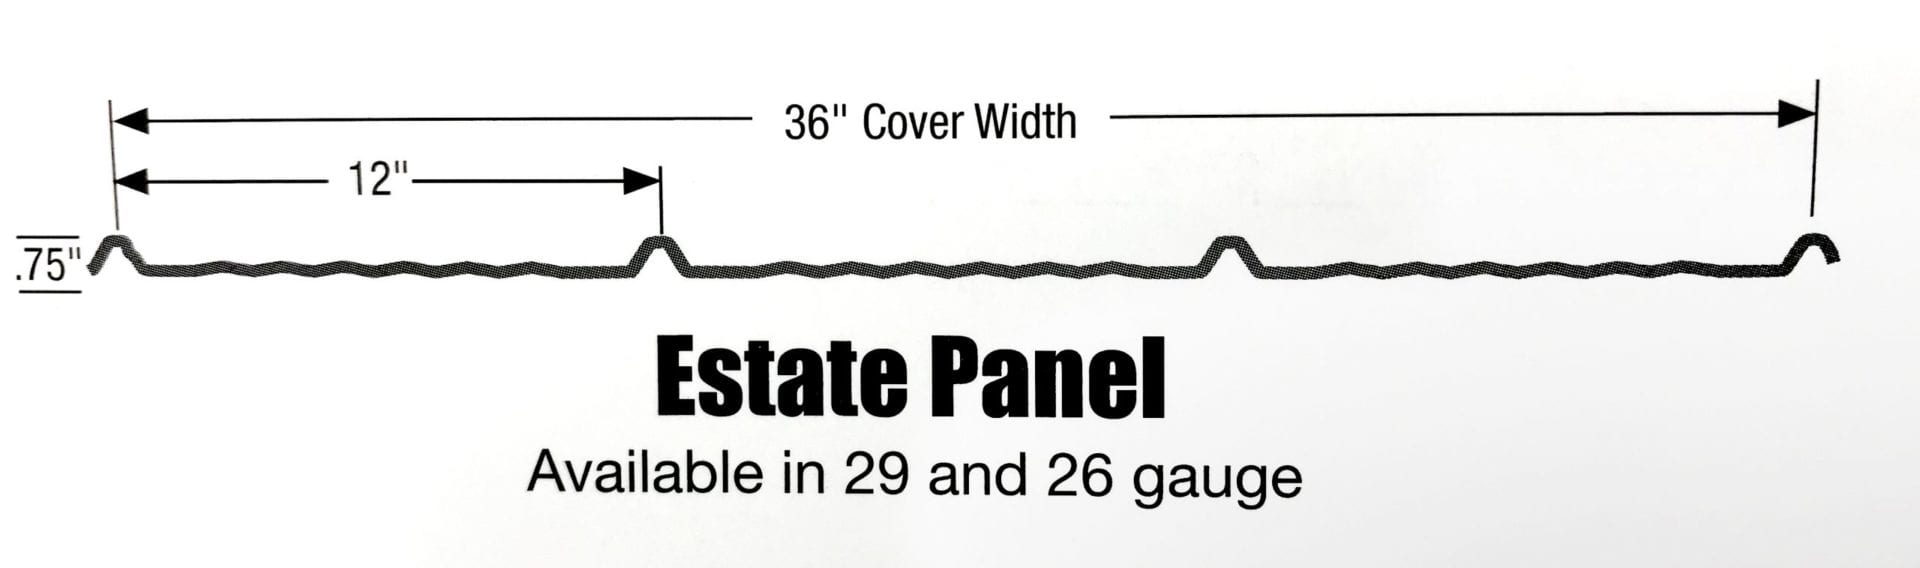 Estate Panel